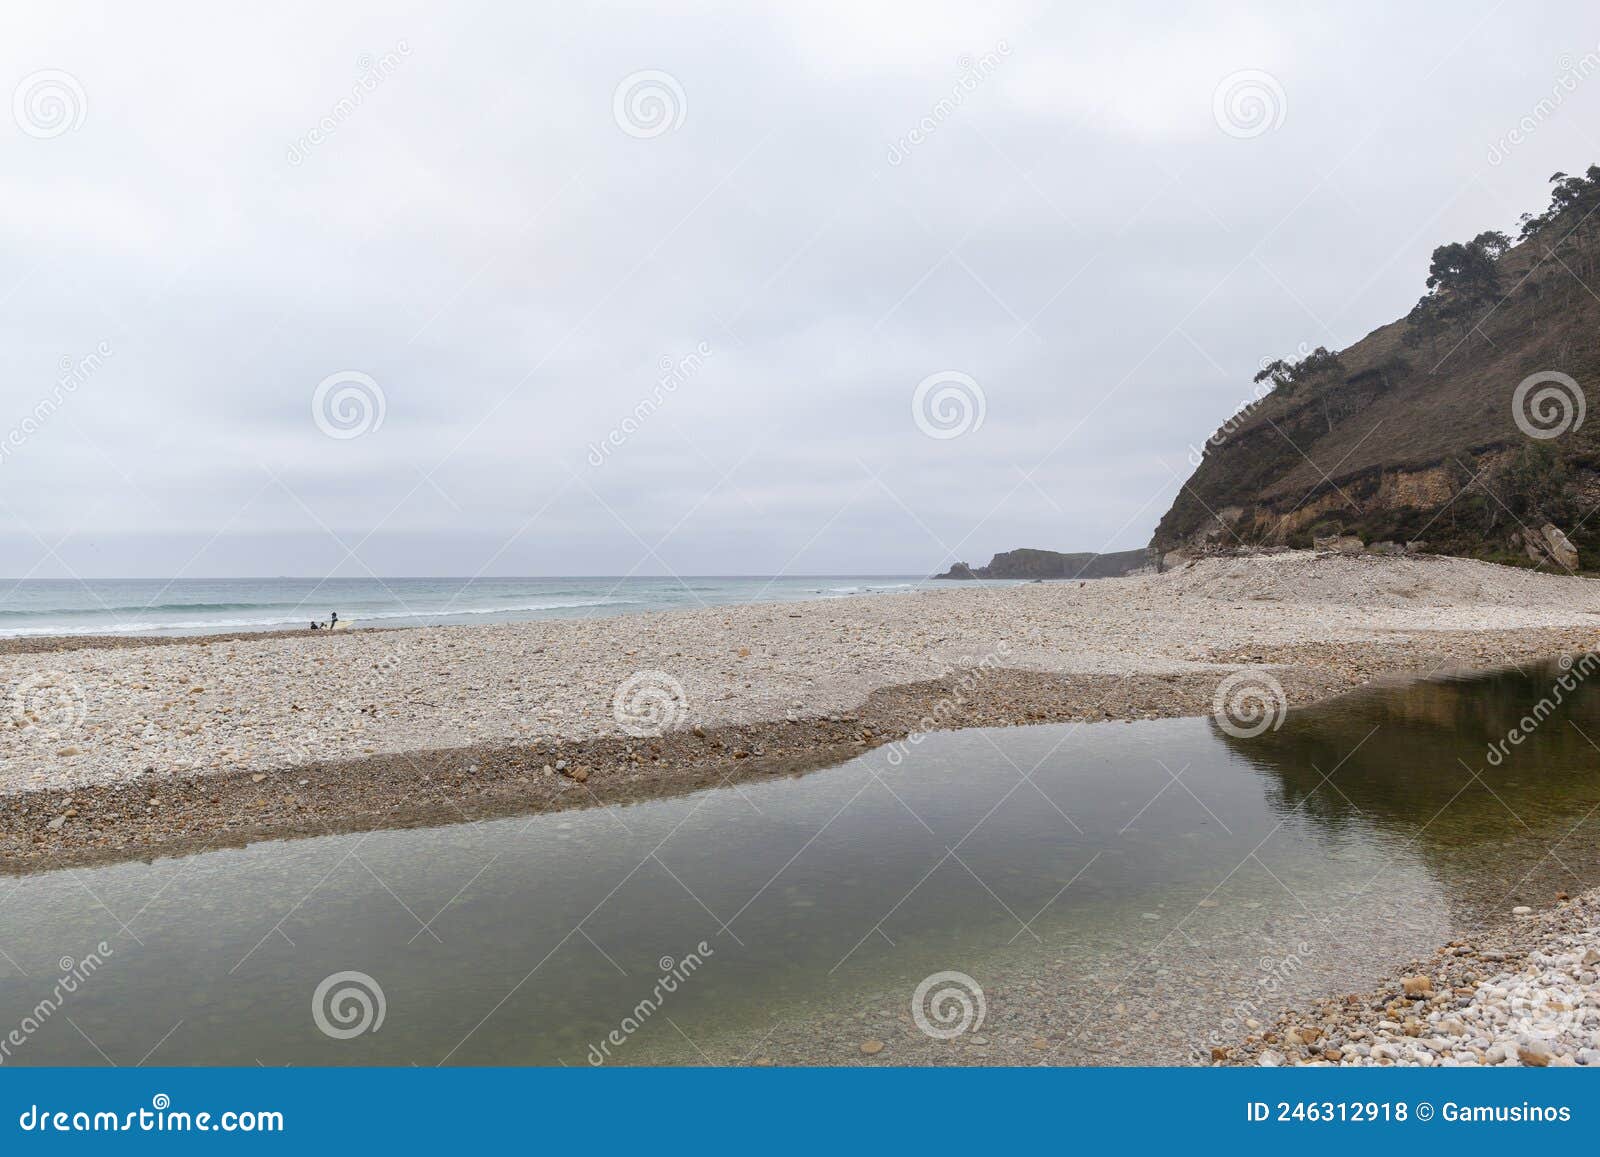 beach of san antolin, naves, llanes, asturias, spain